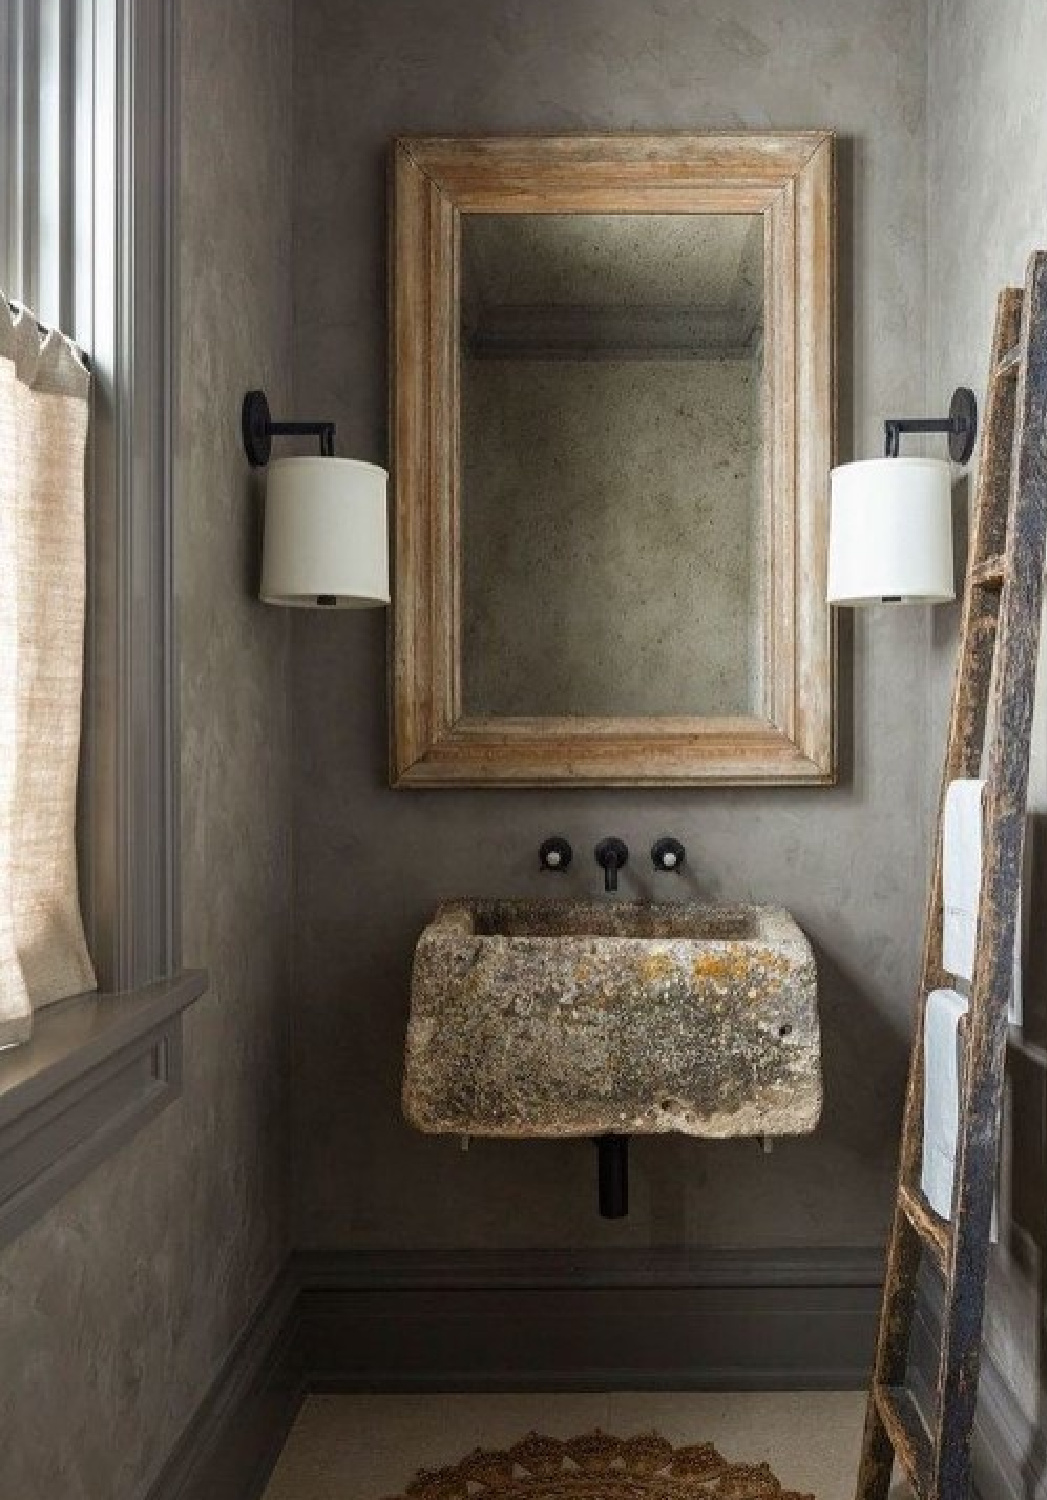 Noa Santos designed rustic modern minimal luxe bath with trough sink, plaster walls, ladder, and muddy earth tones. #luxebath #minimalluxe #troughsinks